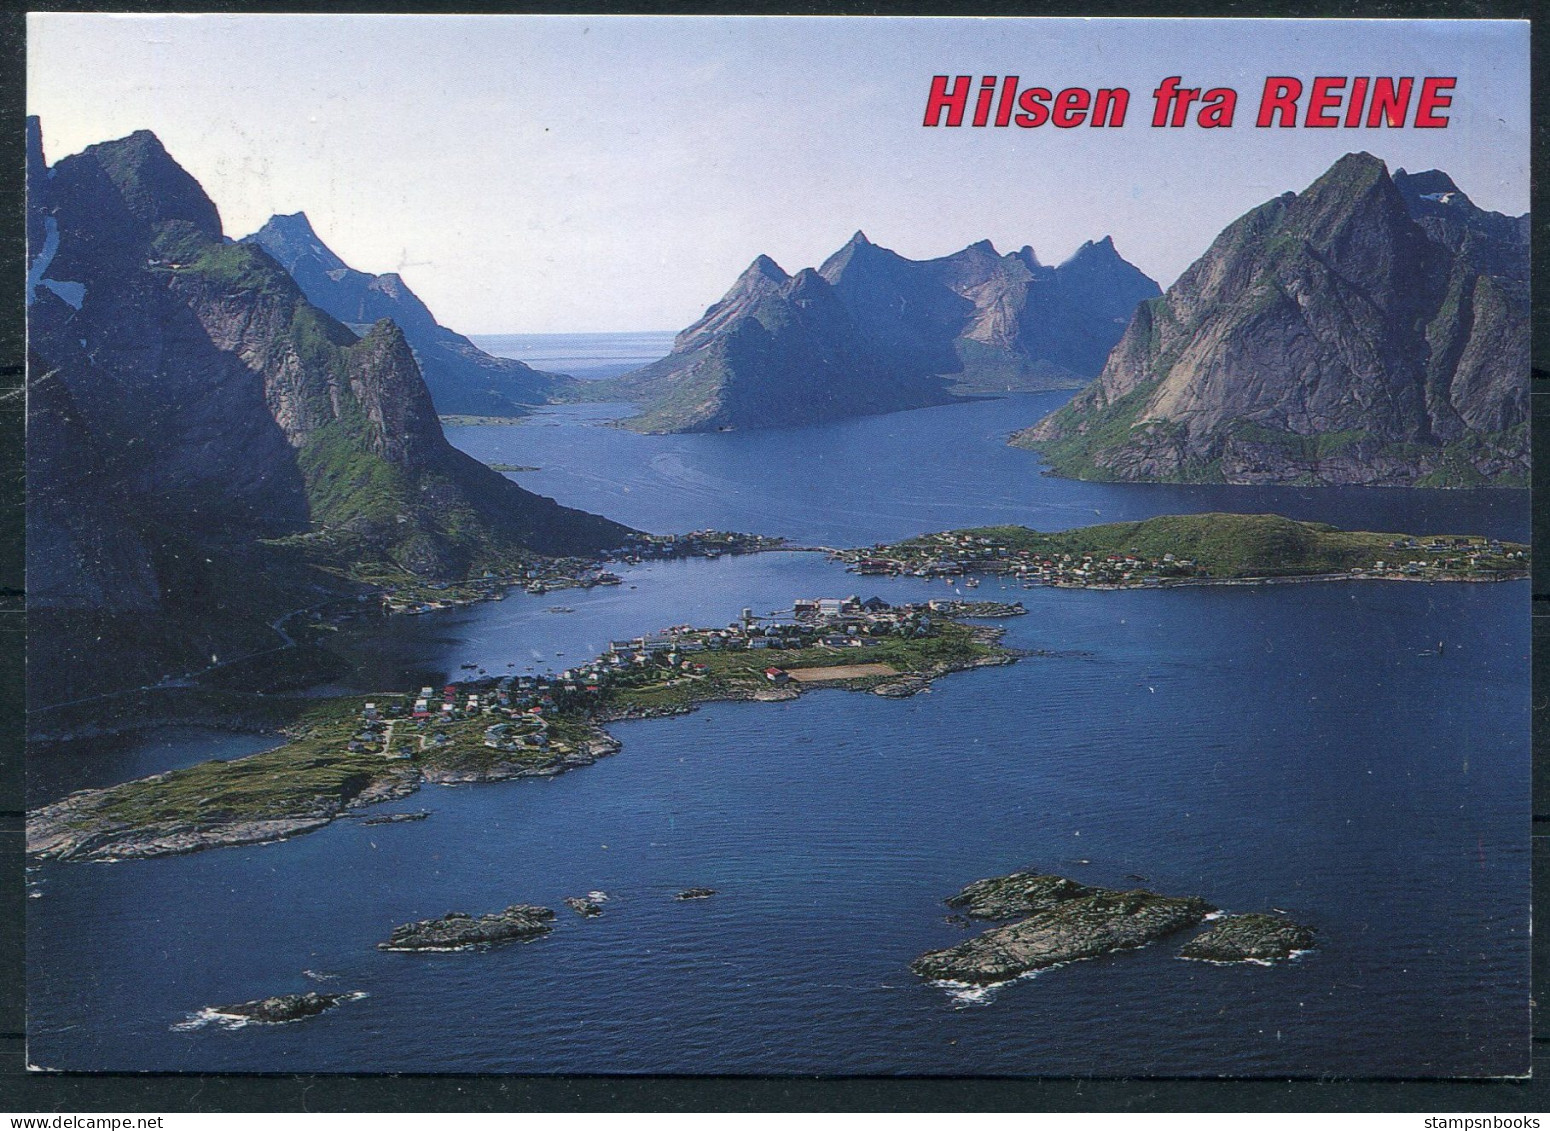 1999 Norway M/S VESTERALEN OVDS Polarsirkelen Ship Reine Postcard - Denmark - Briefe U. Dokumente